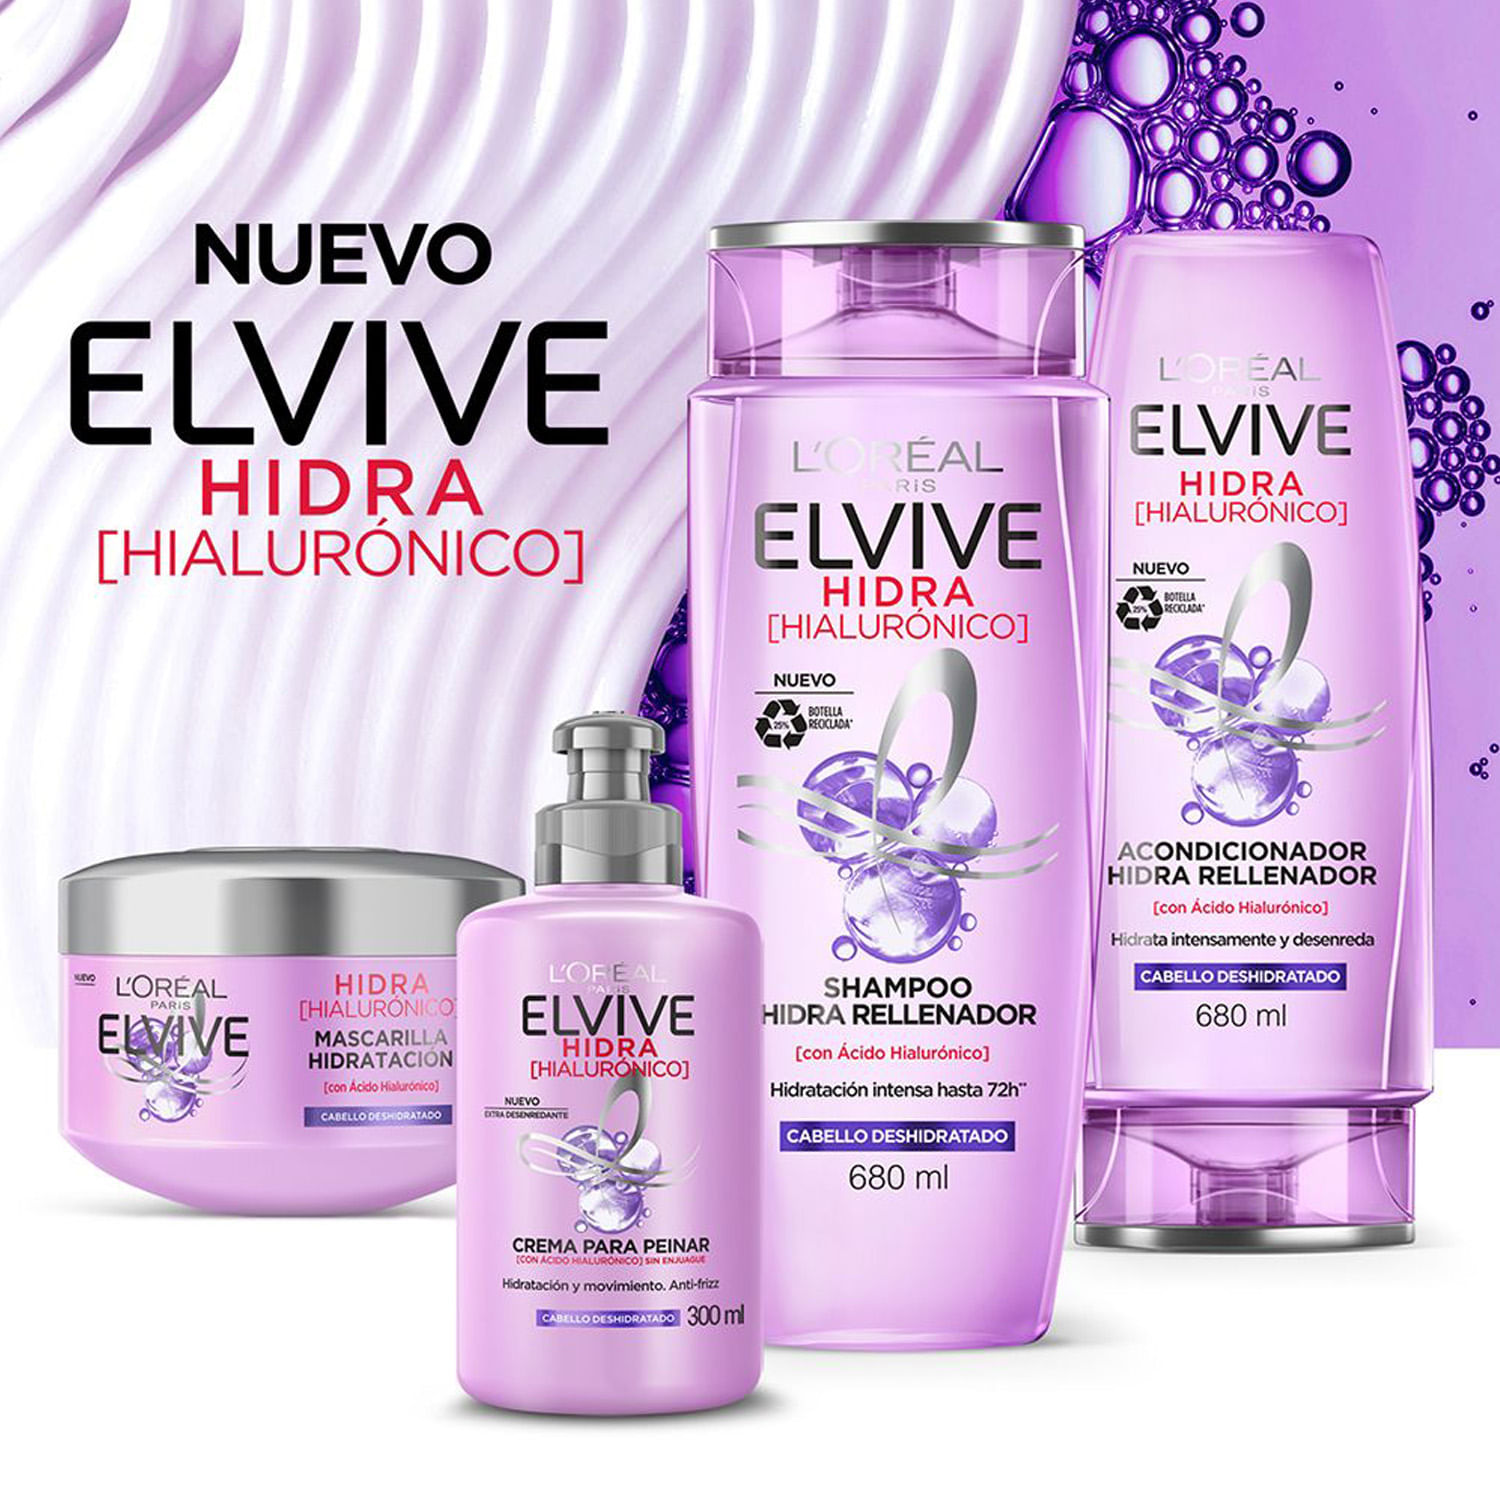 L'Oreal ElVive Hidra (Hialuronico) Shampoo+Acondicionador 680ML(c/u)